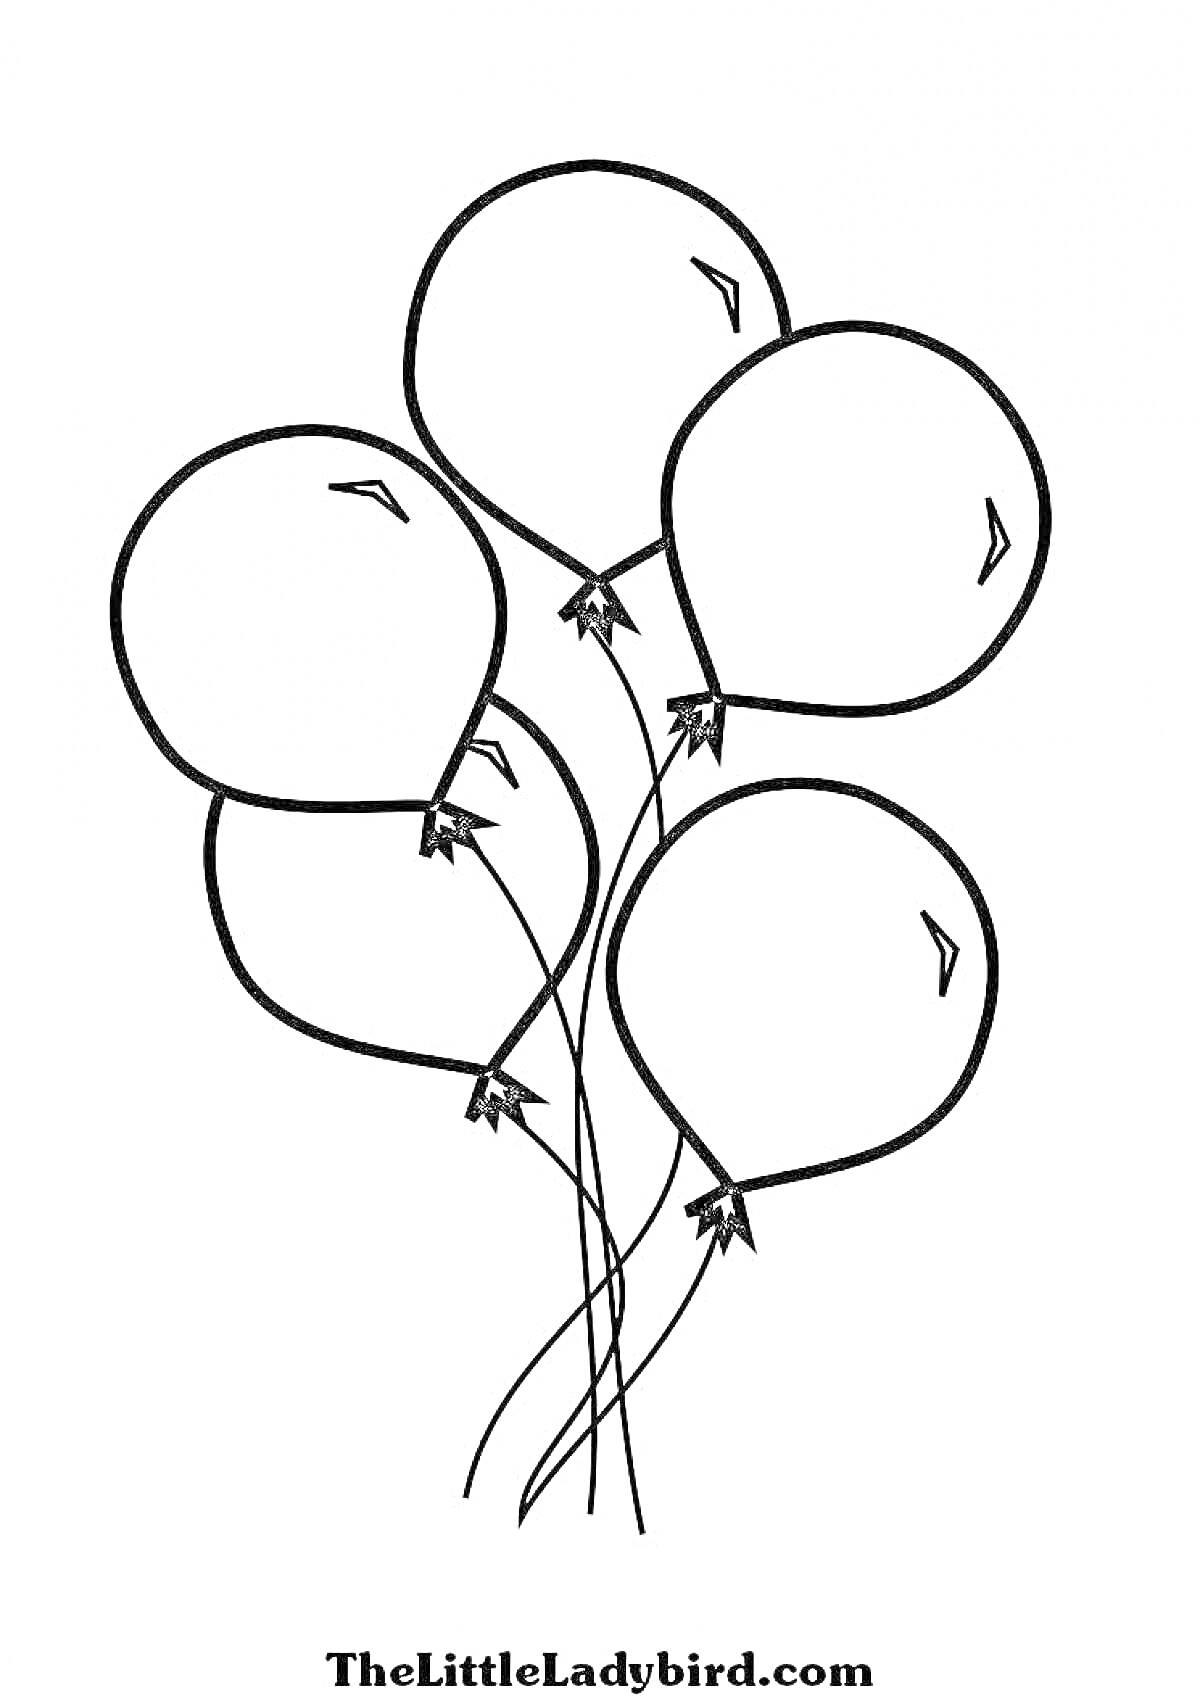 Раскраска Полет воздушных шаров - пять воздушных шариков с хвостиками